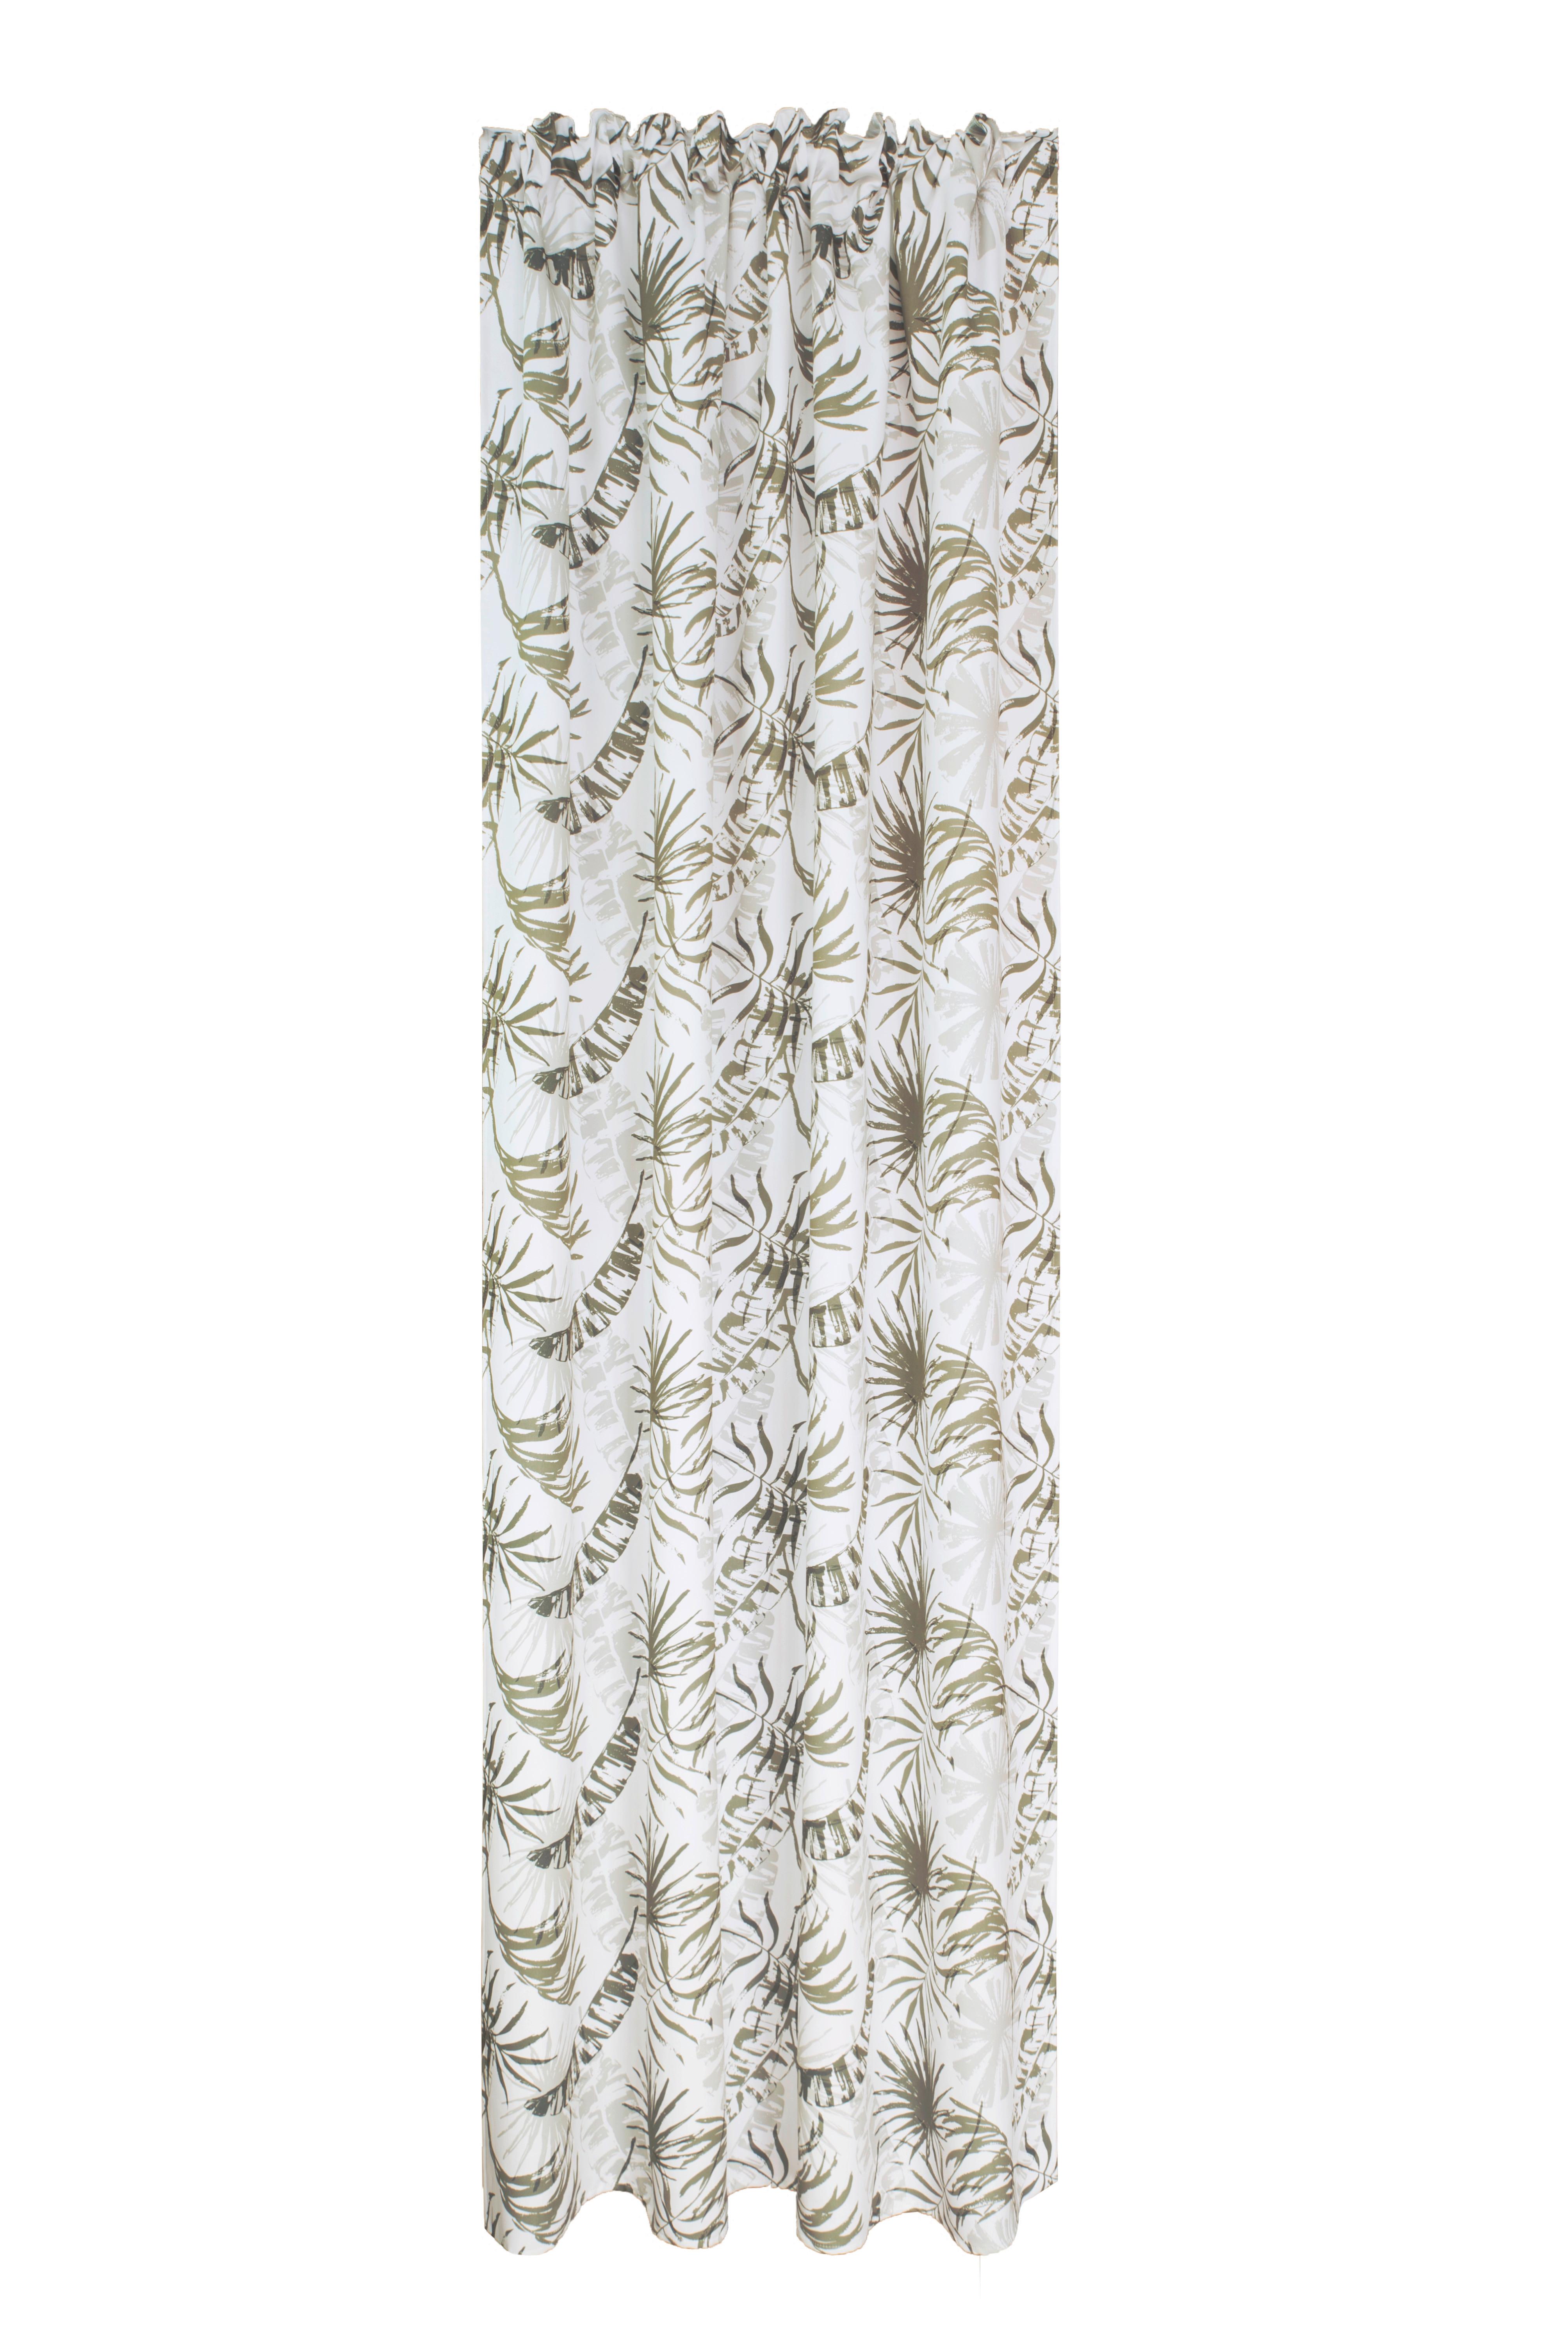 Vorhang mit Multifunktionsband Nele 140x245 cm Olivgrün - Olivgrün, ROMANTIK / LANDHAUS, Textil (140/245cm) - James Wood